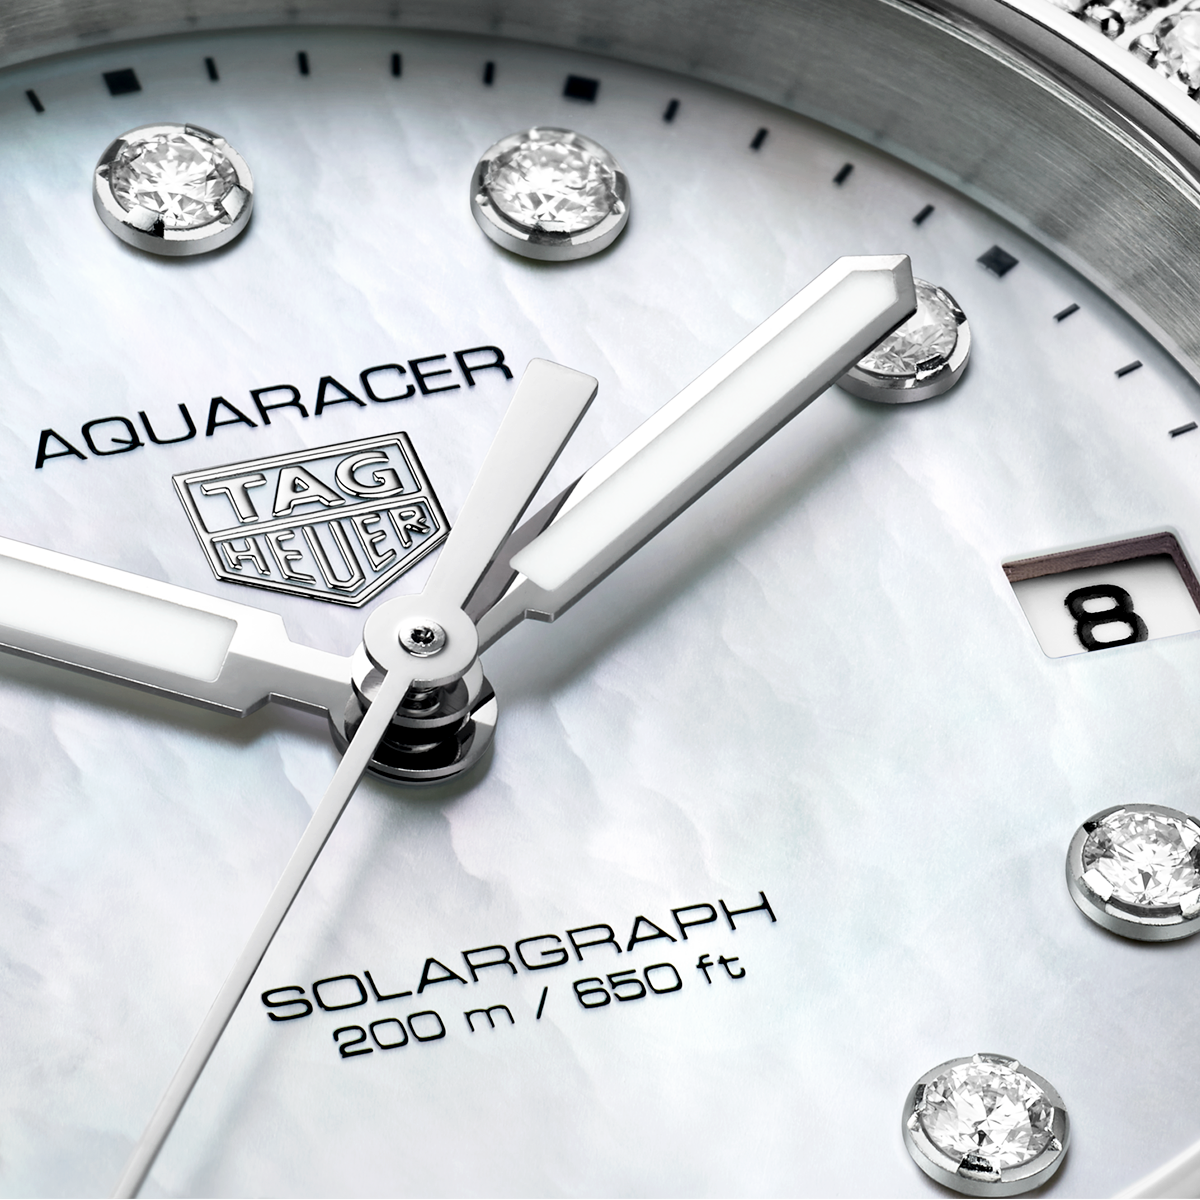 Aquaracer Professional 200 Solargraph 34mm Diamond Dial & Bezel Watch